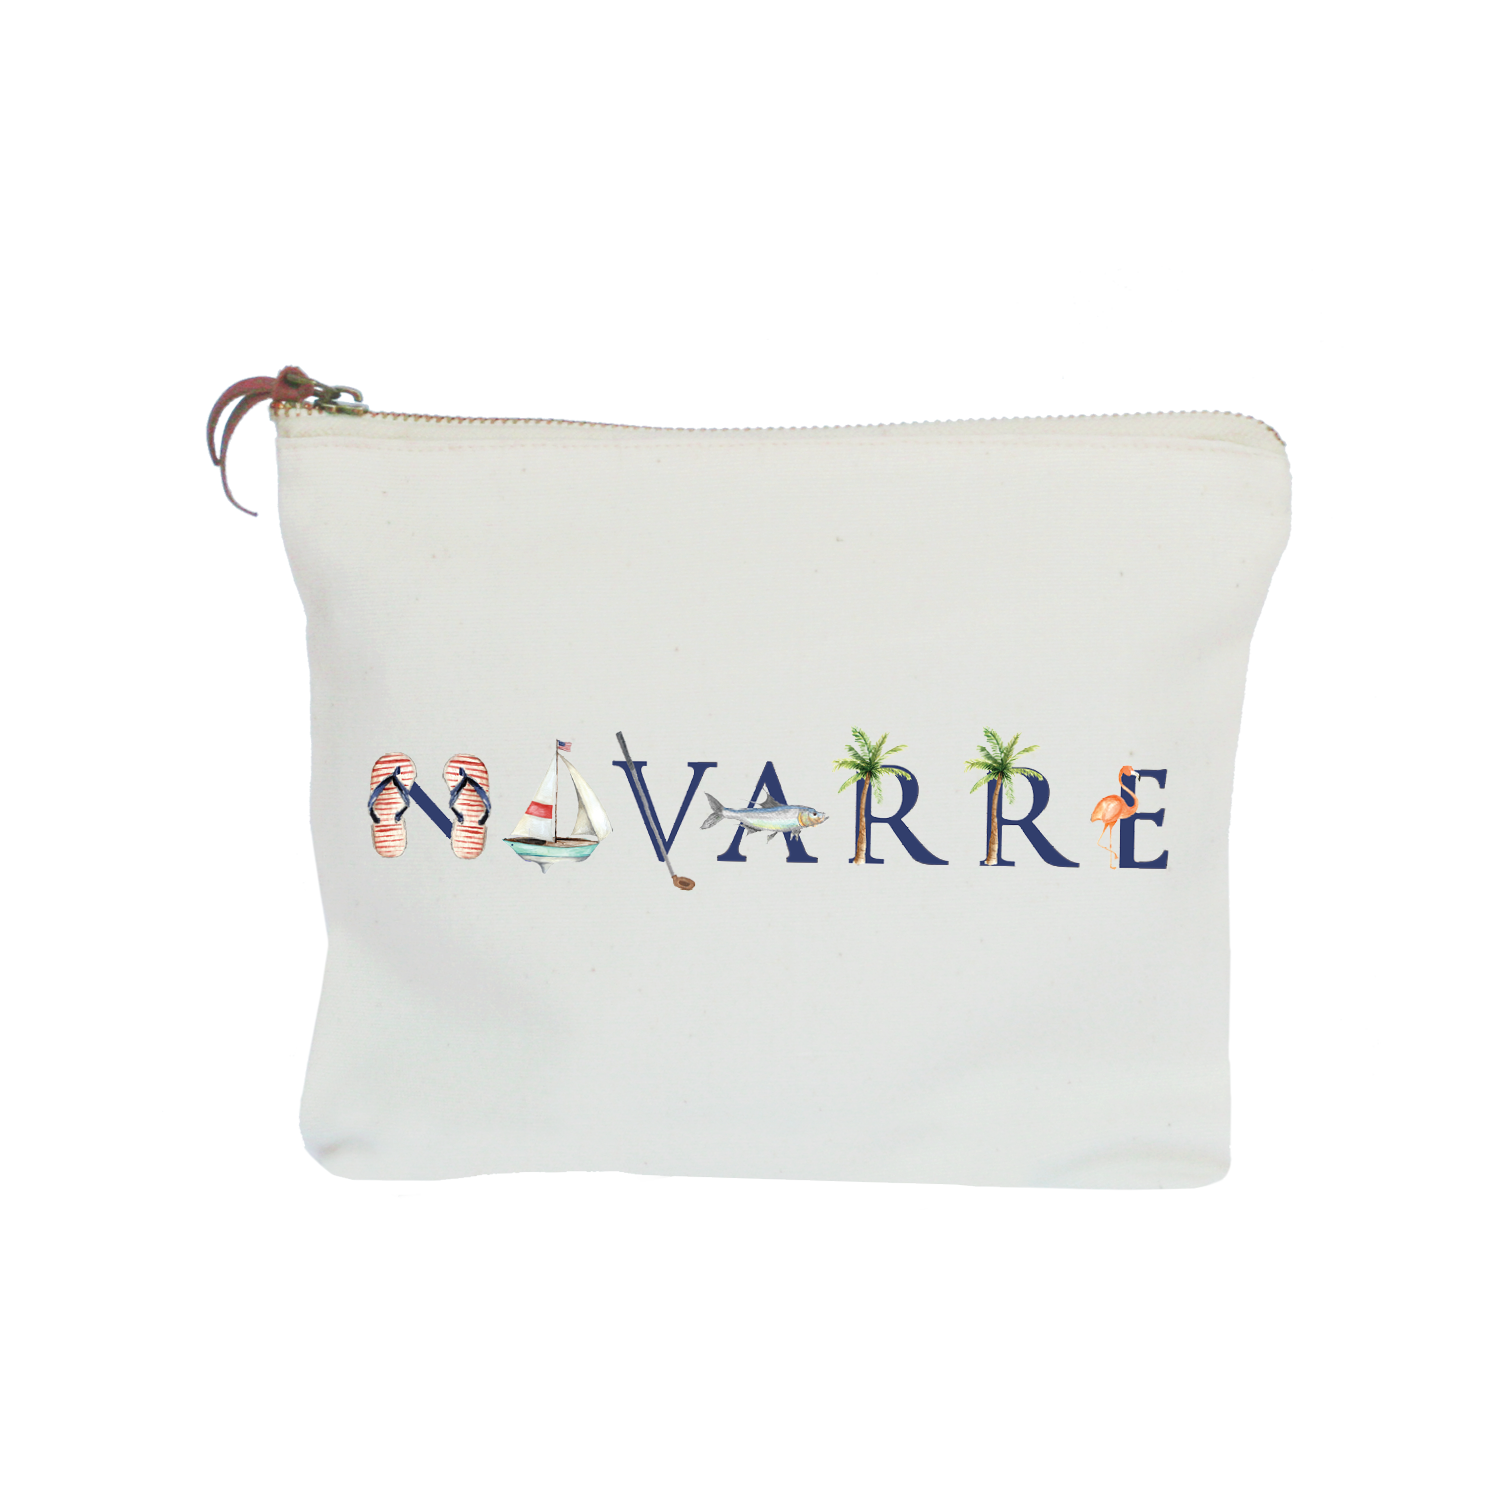 Navarre zipper pouch